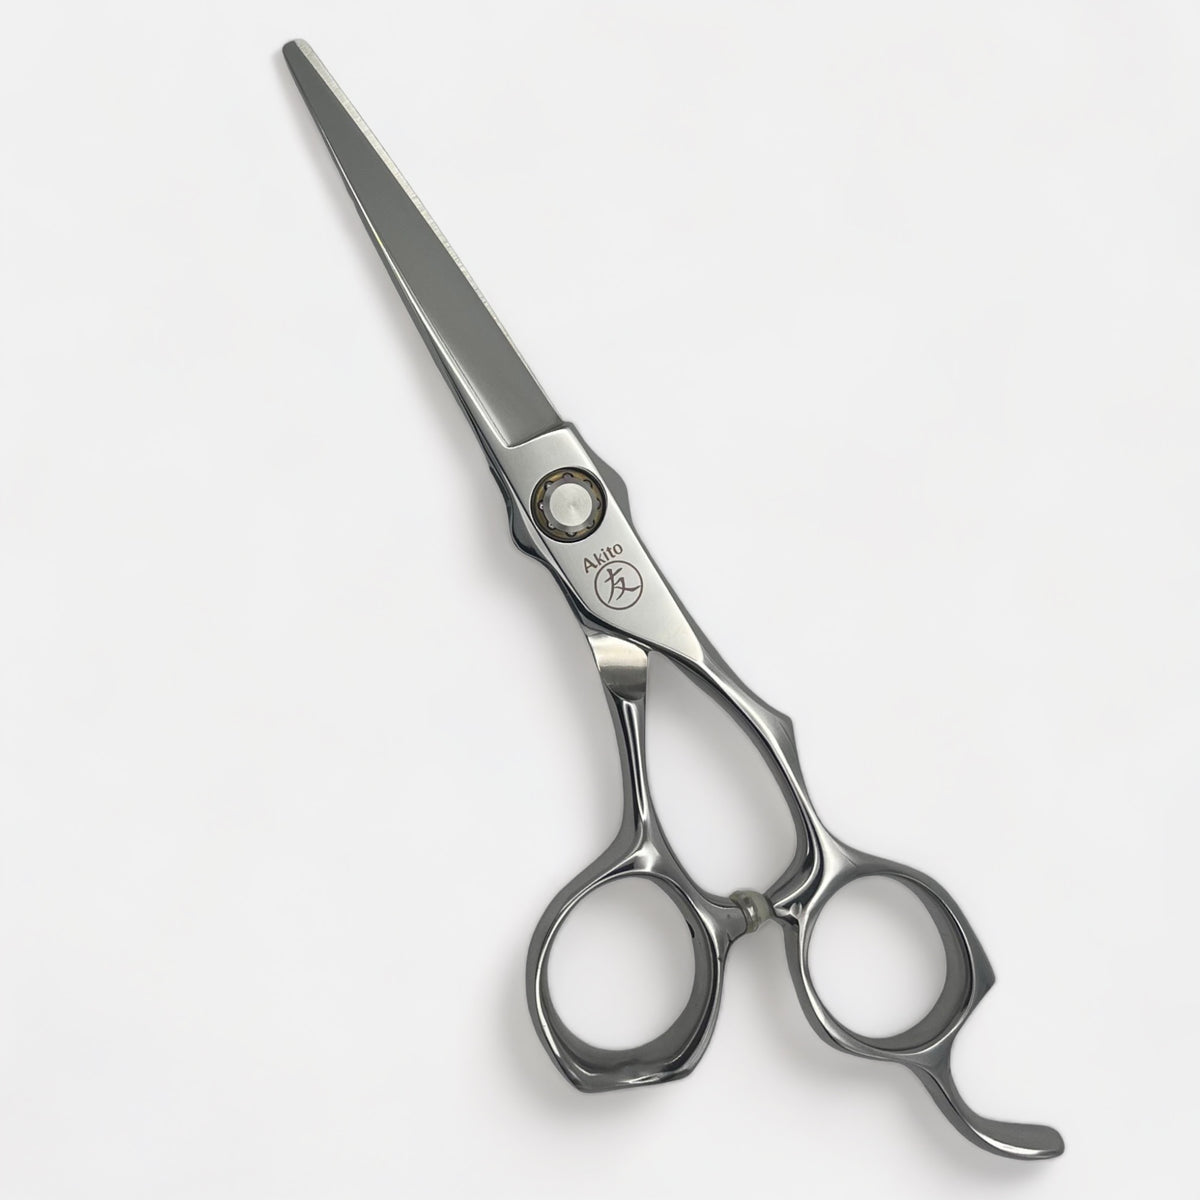 Kasai Professional Hair Scissors side angle grey